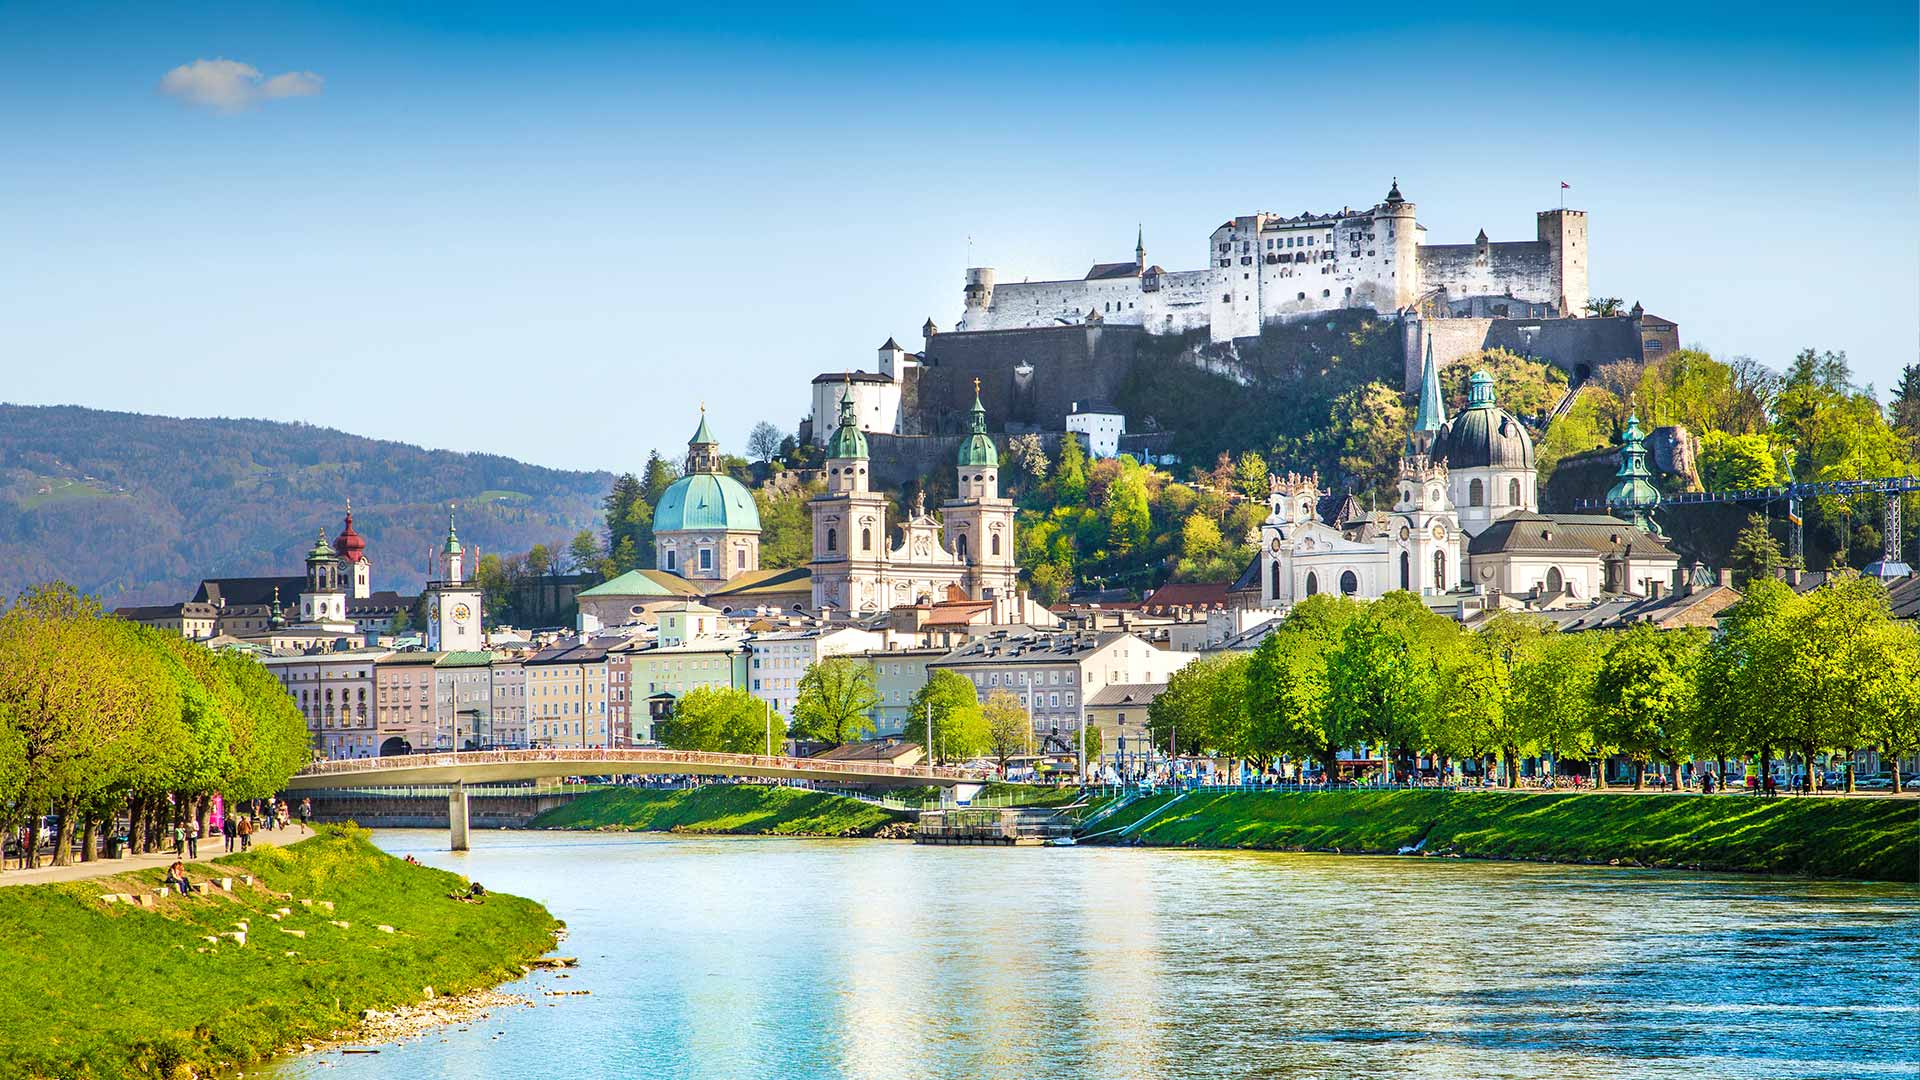 River view of Salzburg city, Austria